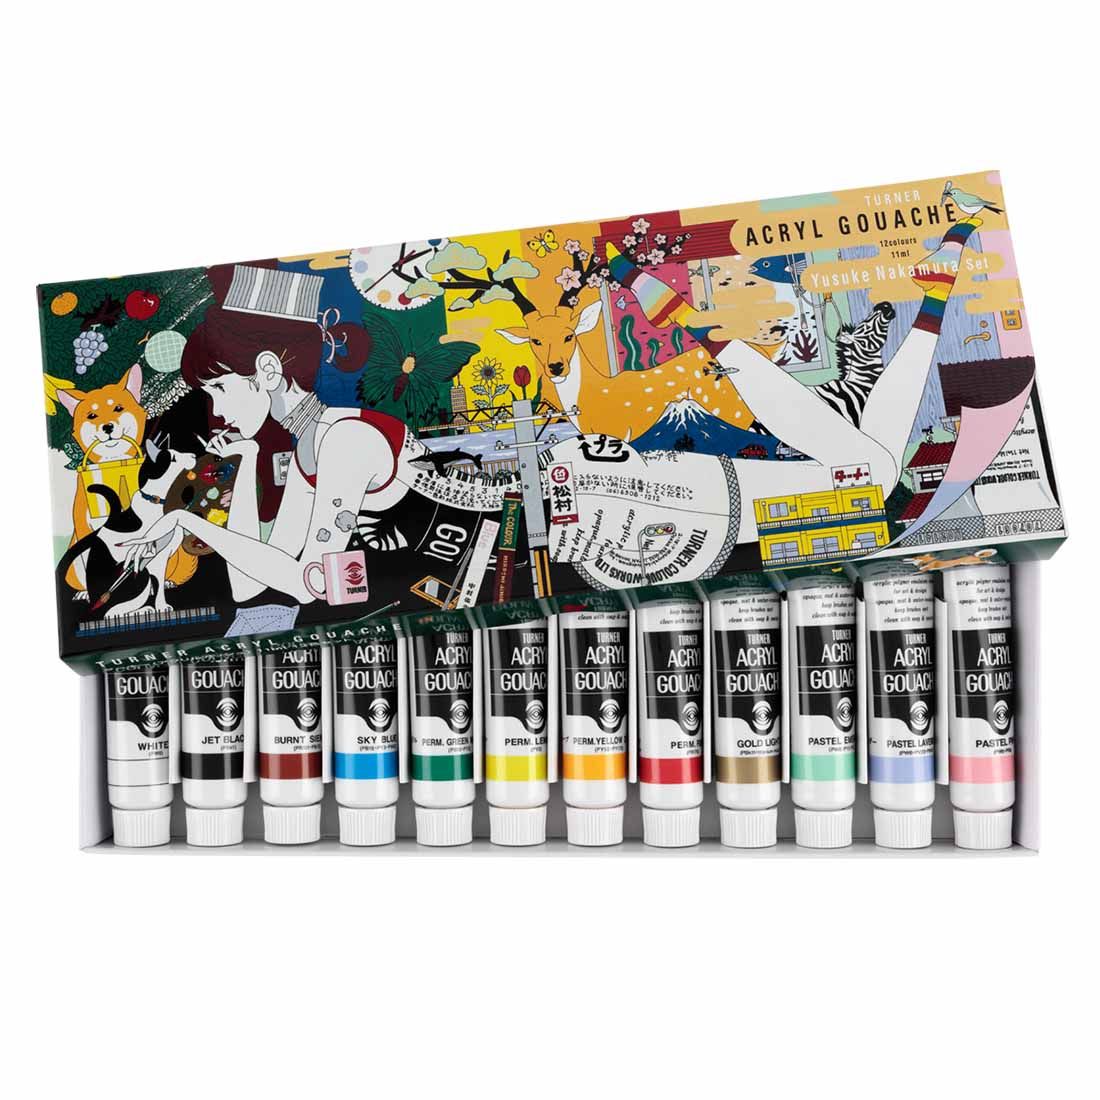 Turner Acryl Gouache Japanesque 24 Color Set A 20ml Tubes F/S w/Tracking#  Japan